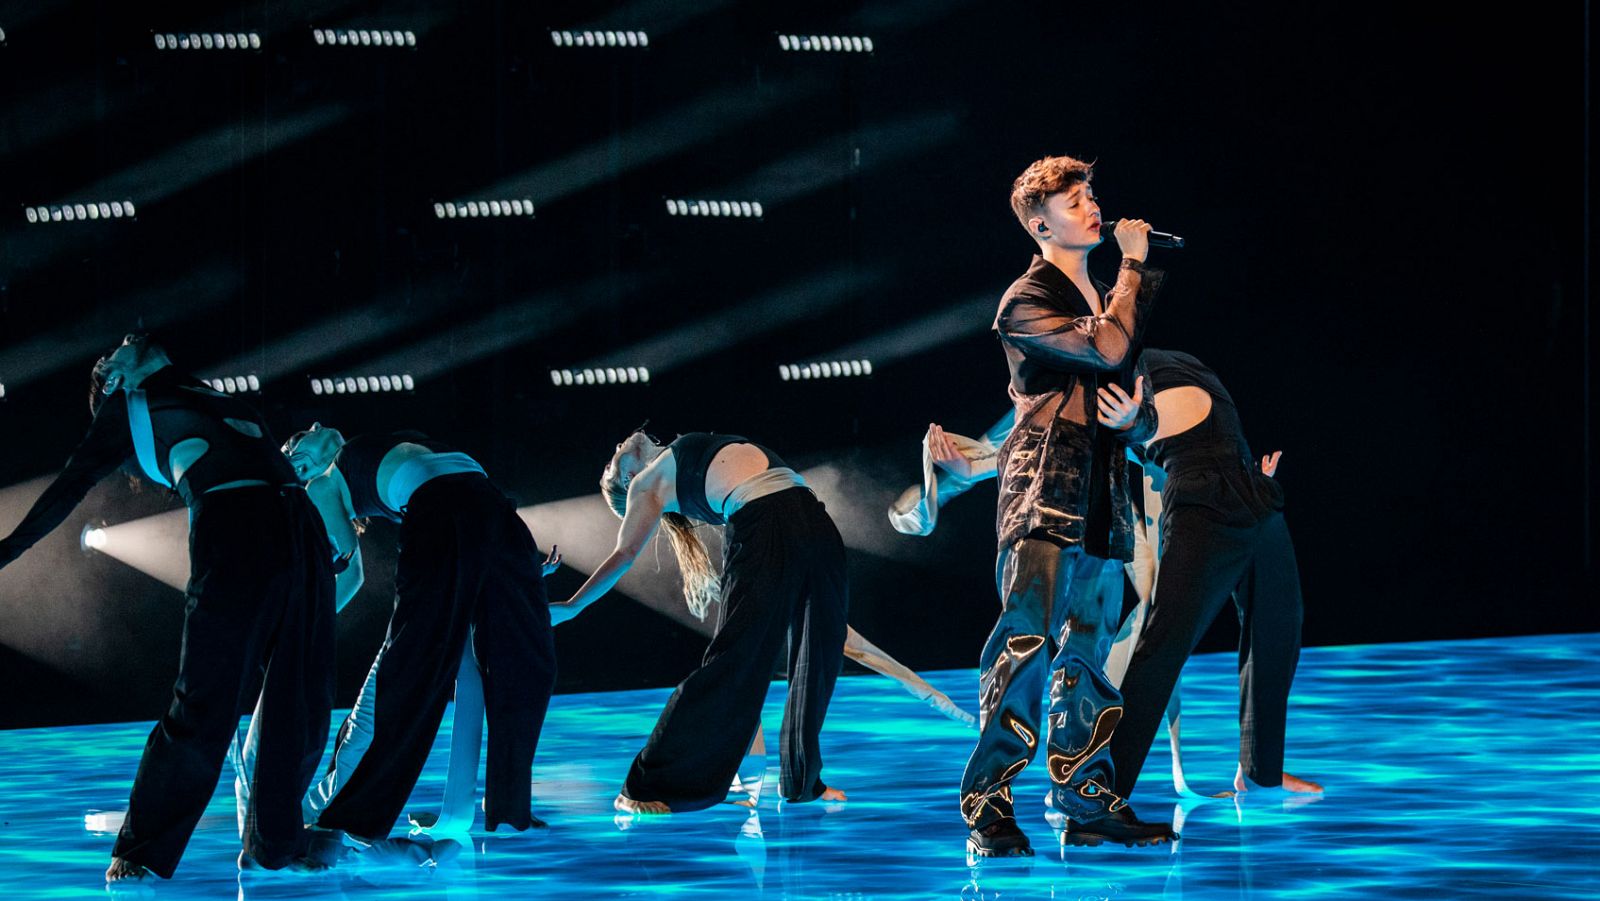 Eurovisión 2023 - Suiza: Remo Forrer canta "Watergun" en la primera semifinal